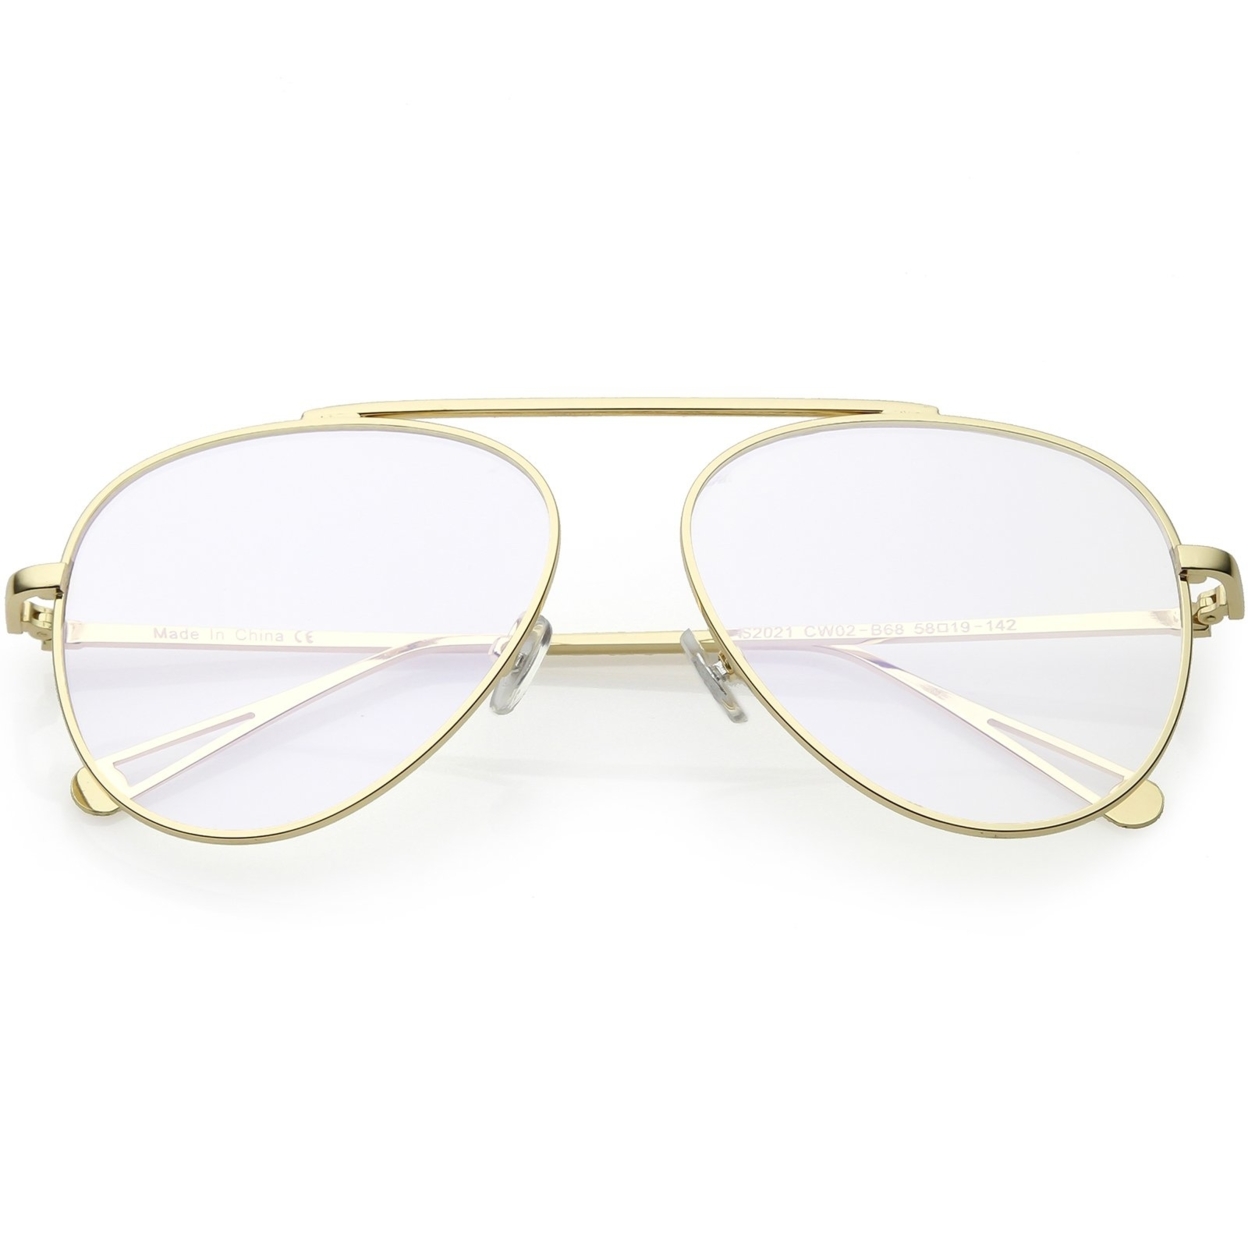 Premium Modern Metal Aviator Eyeglasses Single Brow Bar Clear Flat Lens 57mm - Gold / Clear